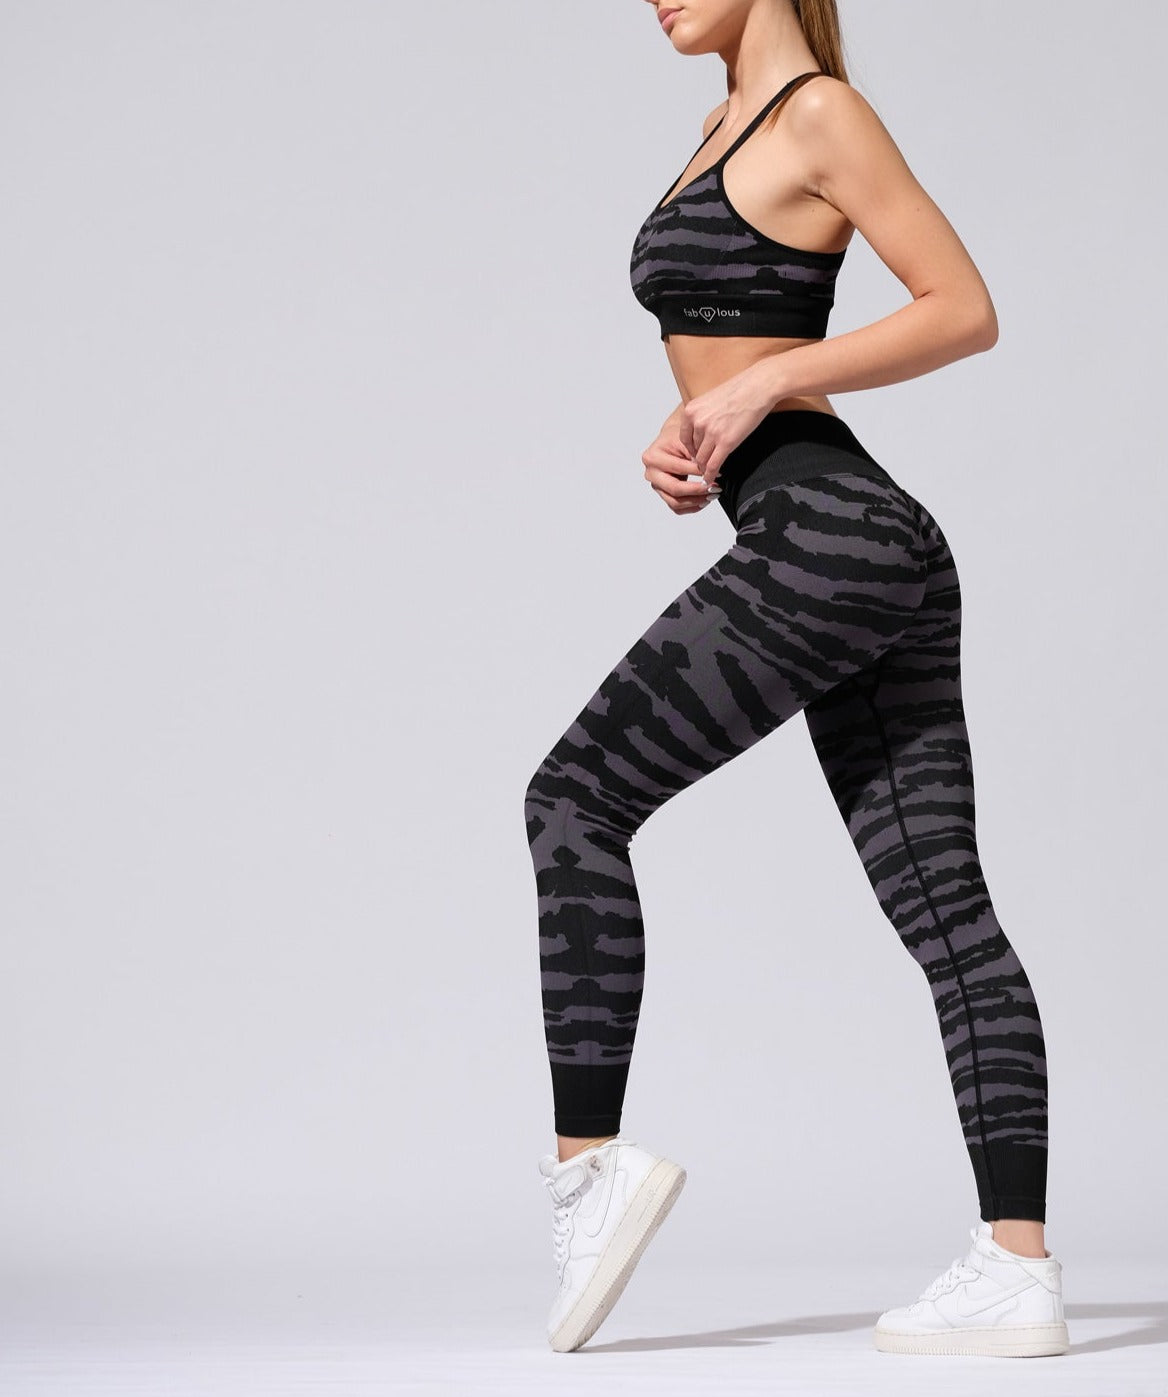 Allure Fitness Set Push-Up Effect Leggings with Sports Bra in Zebra Print Black